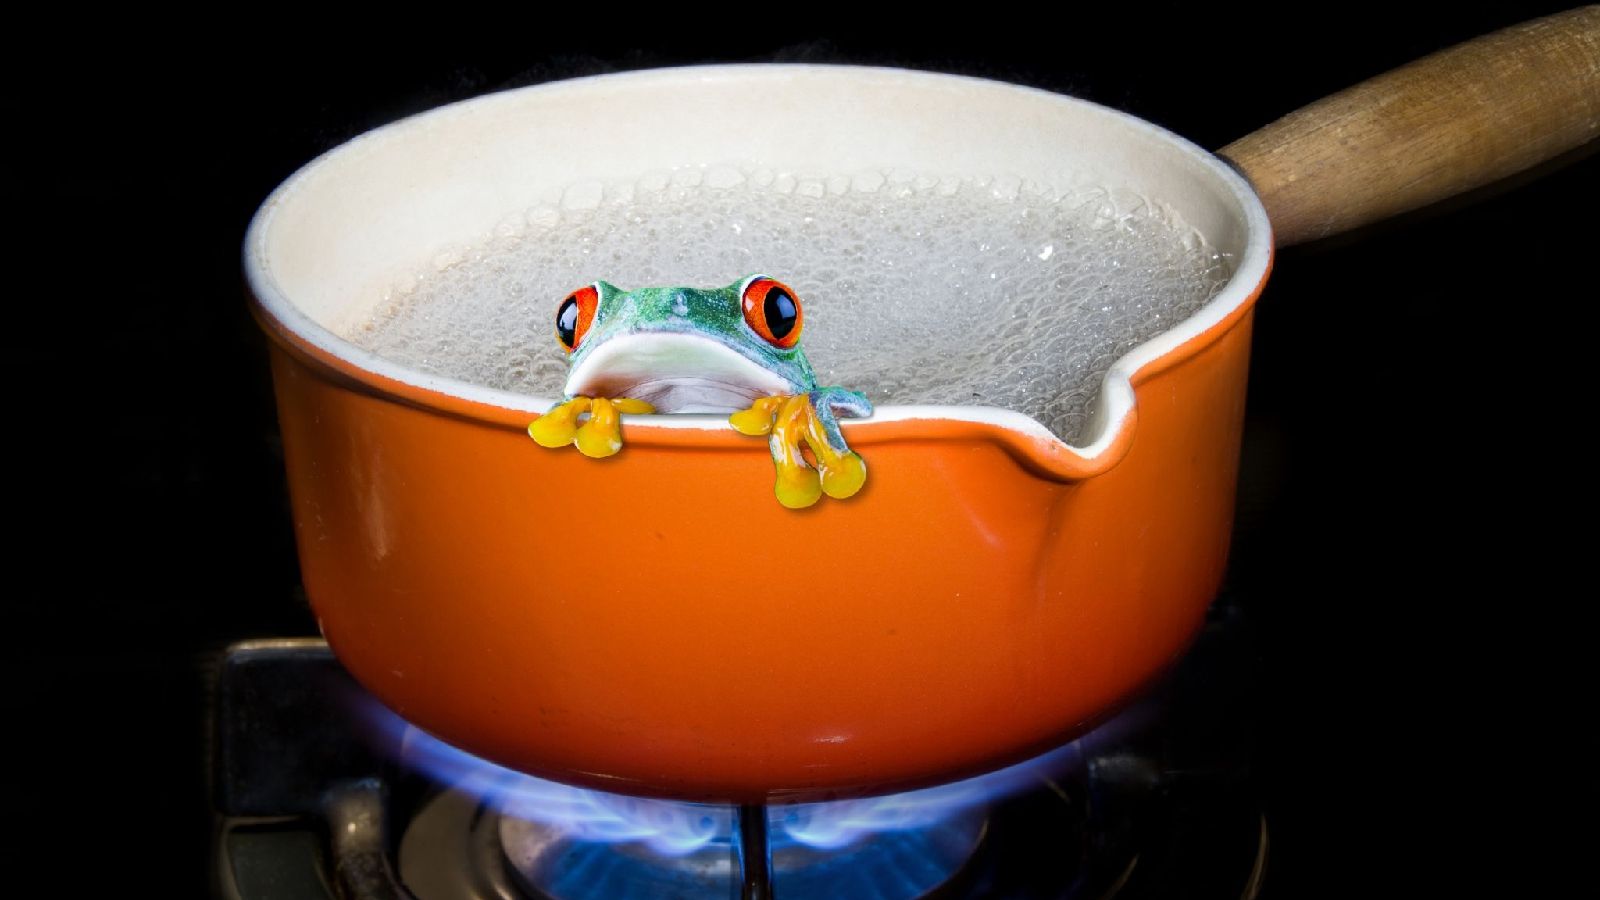 Boiling Frog or Hot Retailer?